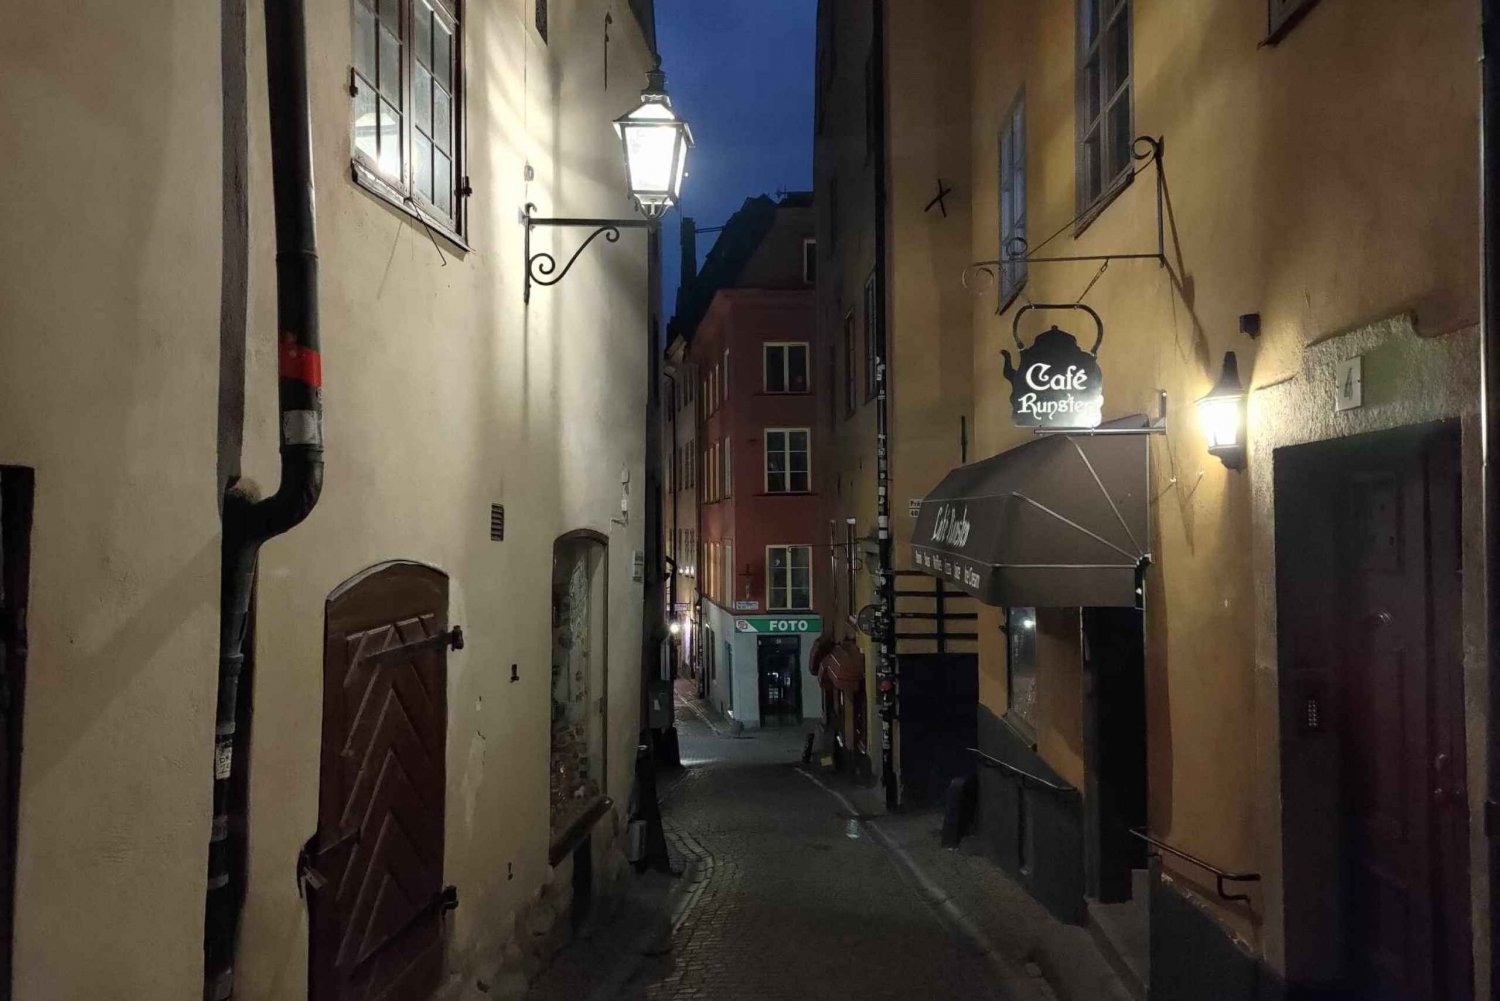 Stoccolma insanguinata: fantasmi, orrore e folklore oscuro 2h